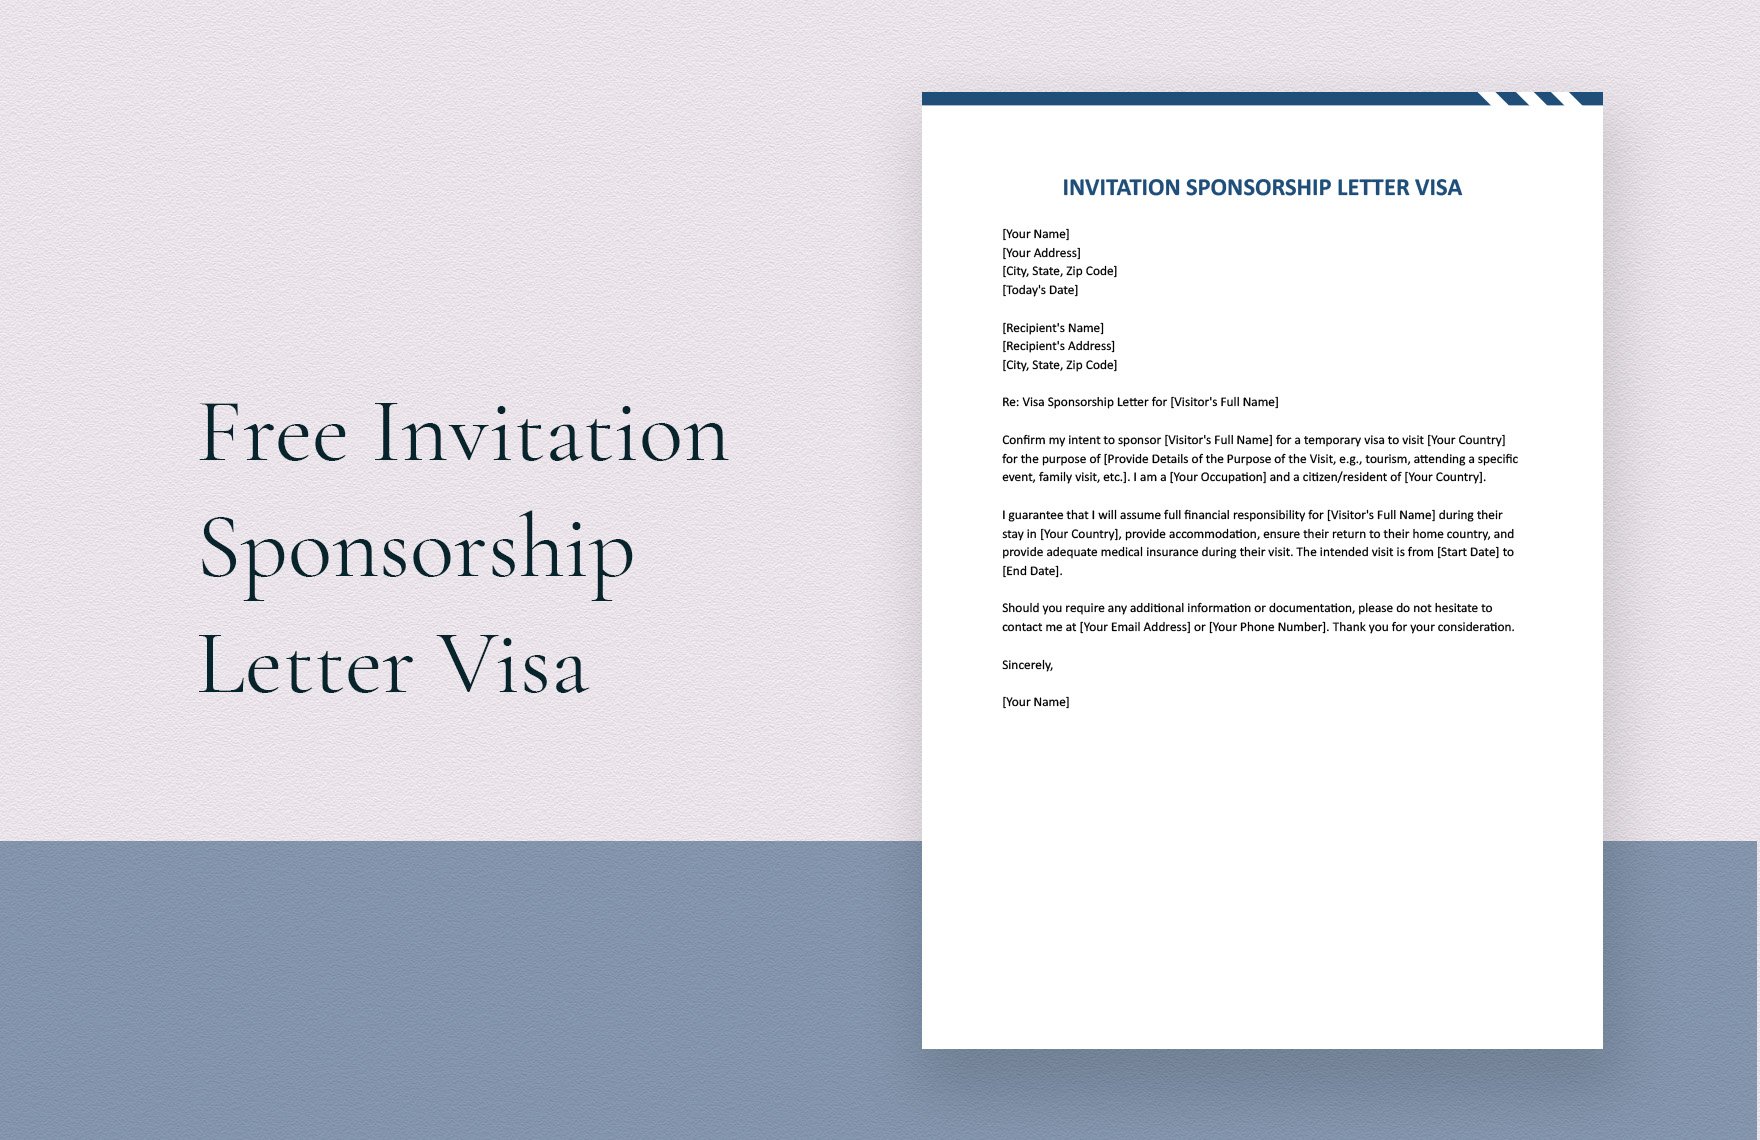 Invitation Sponsorship Letter Visa